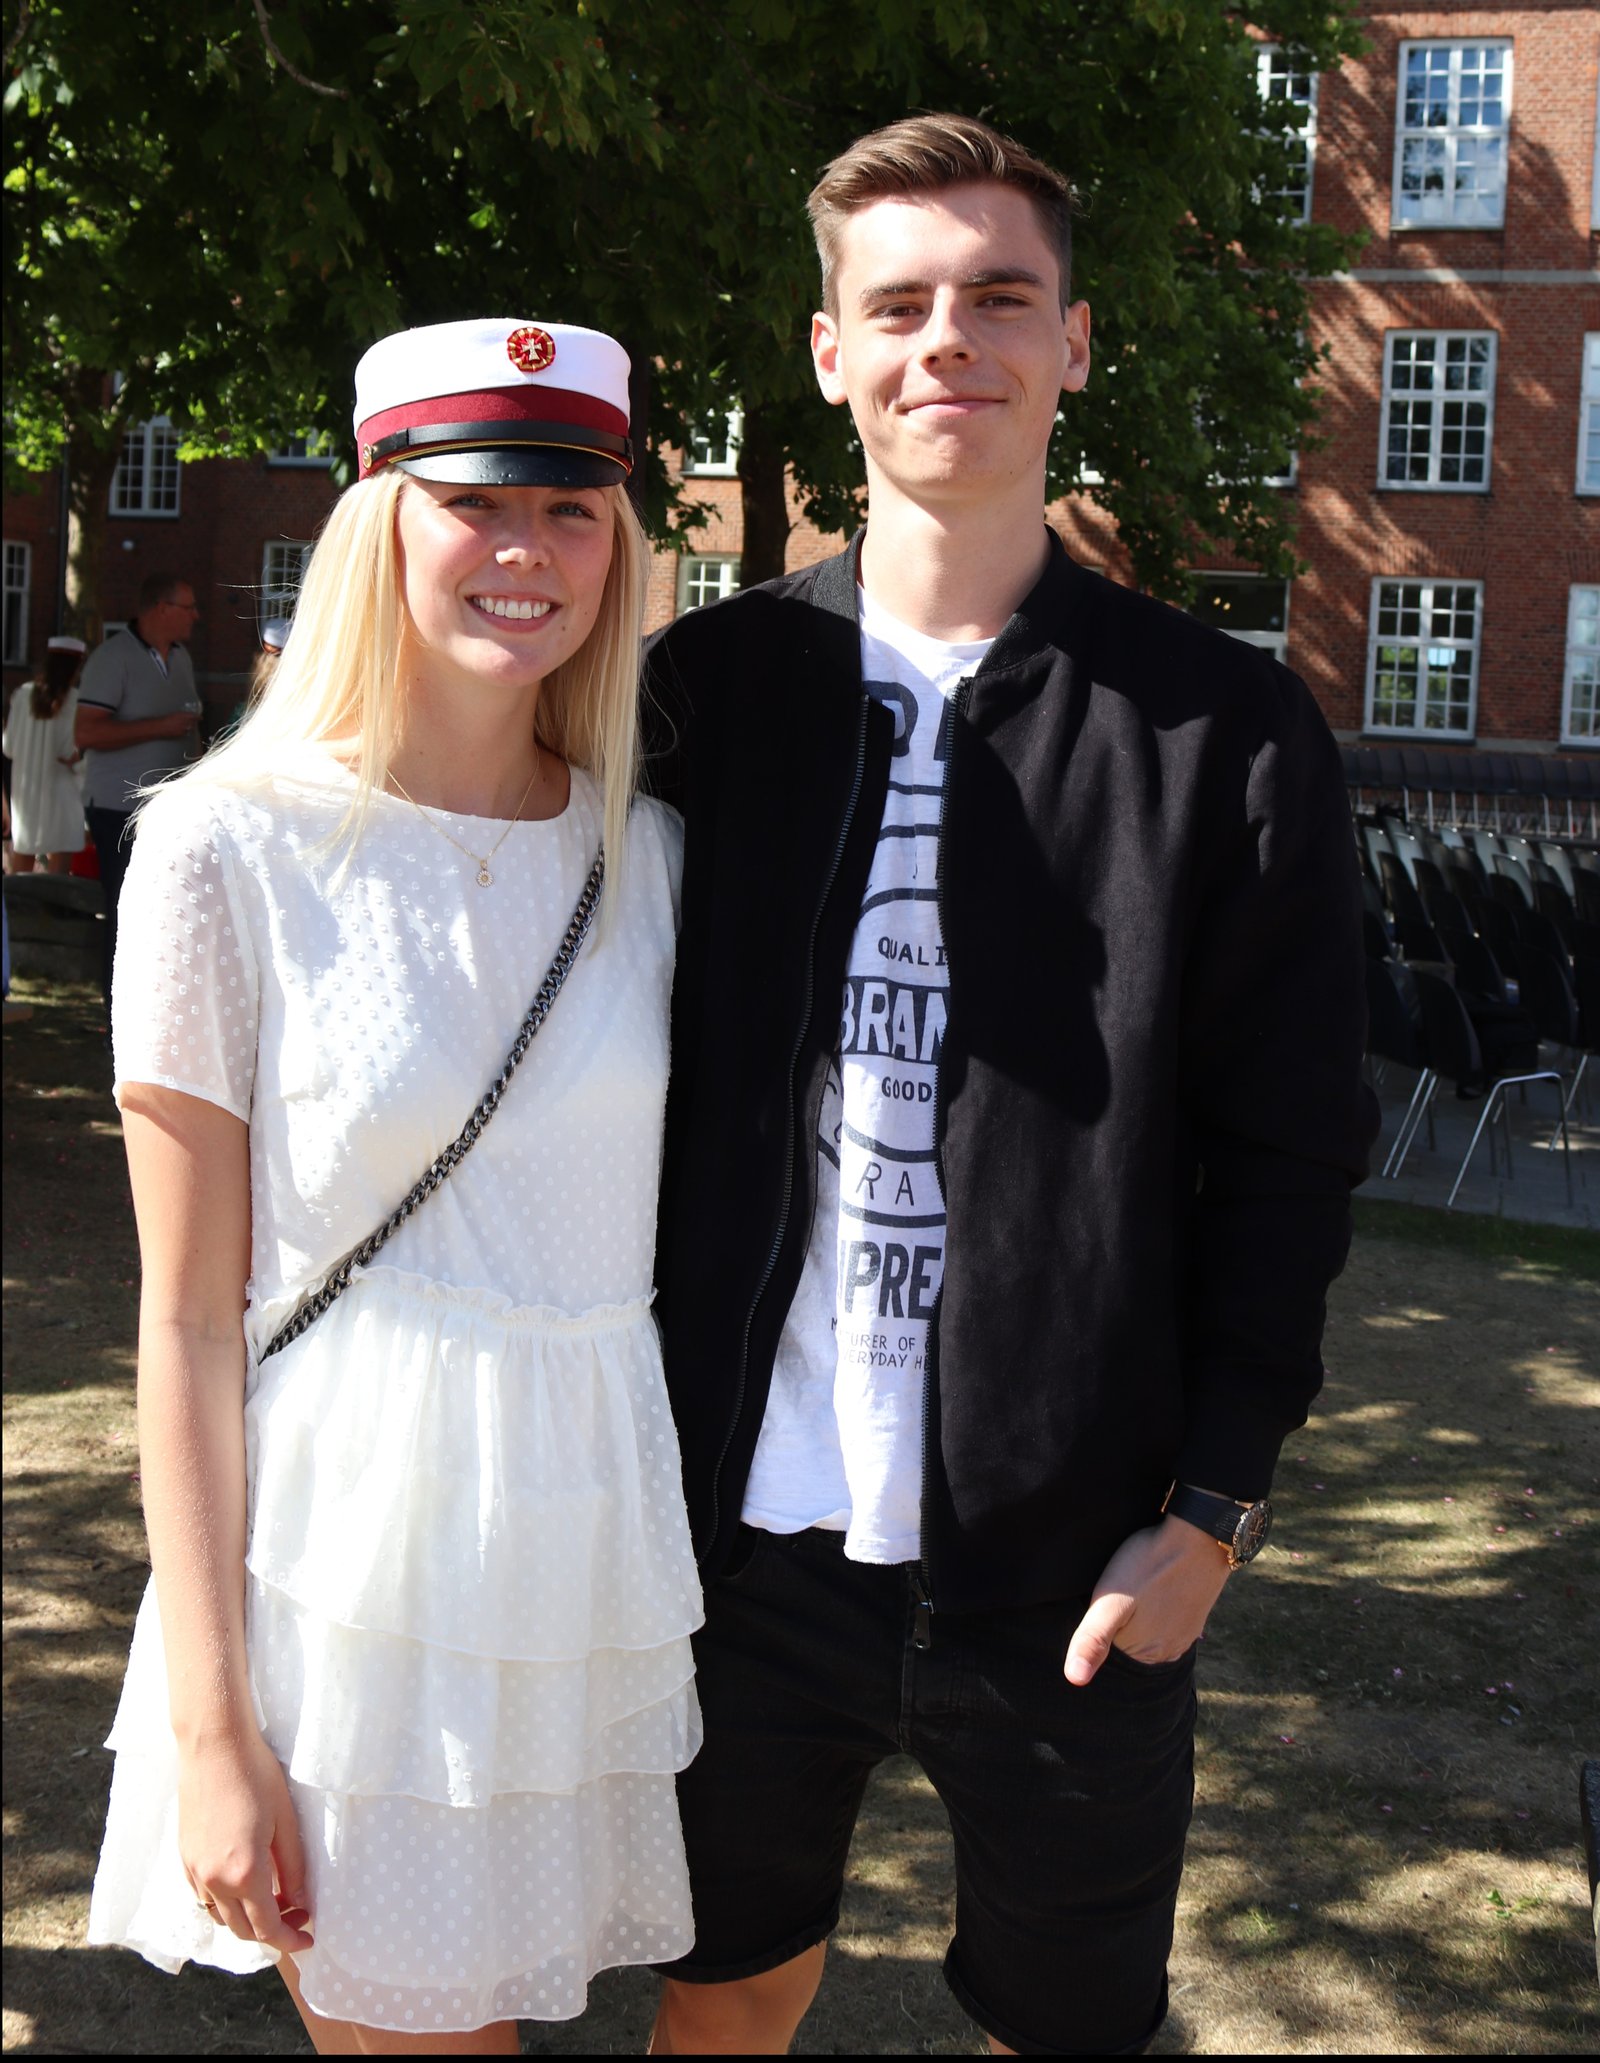 Danish graduation ceremony